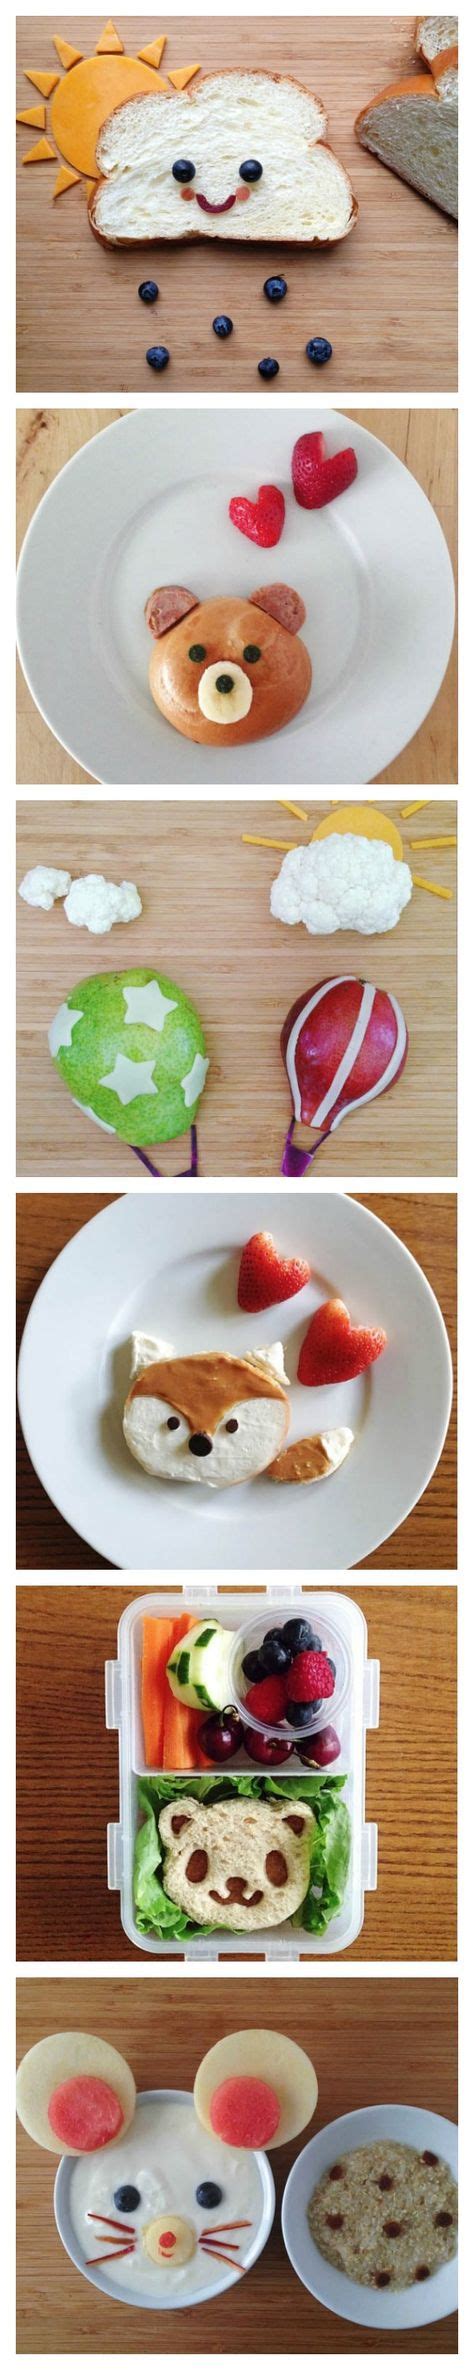 140 Kids Food Ideas Food Kids Meals Fun Kids Food